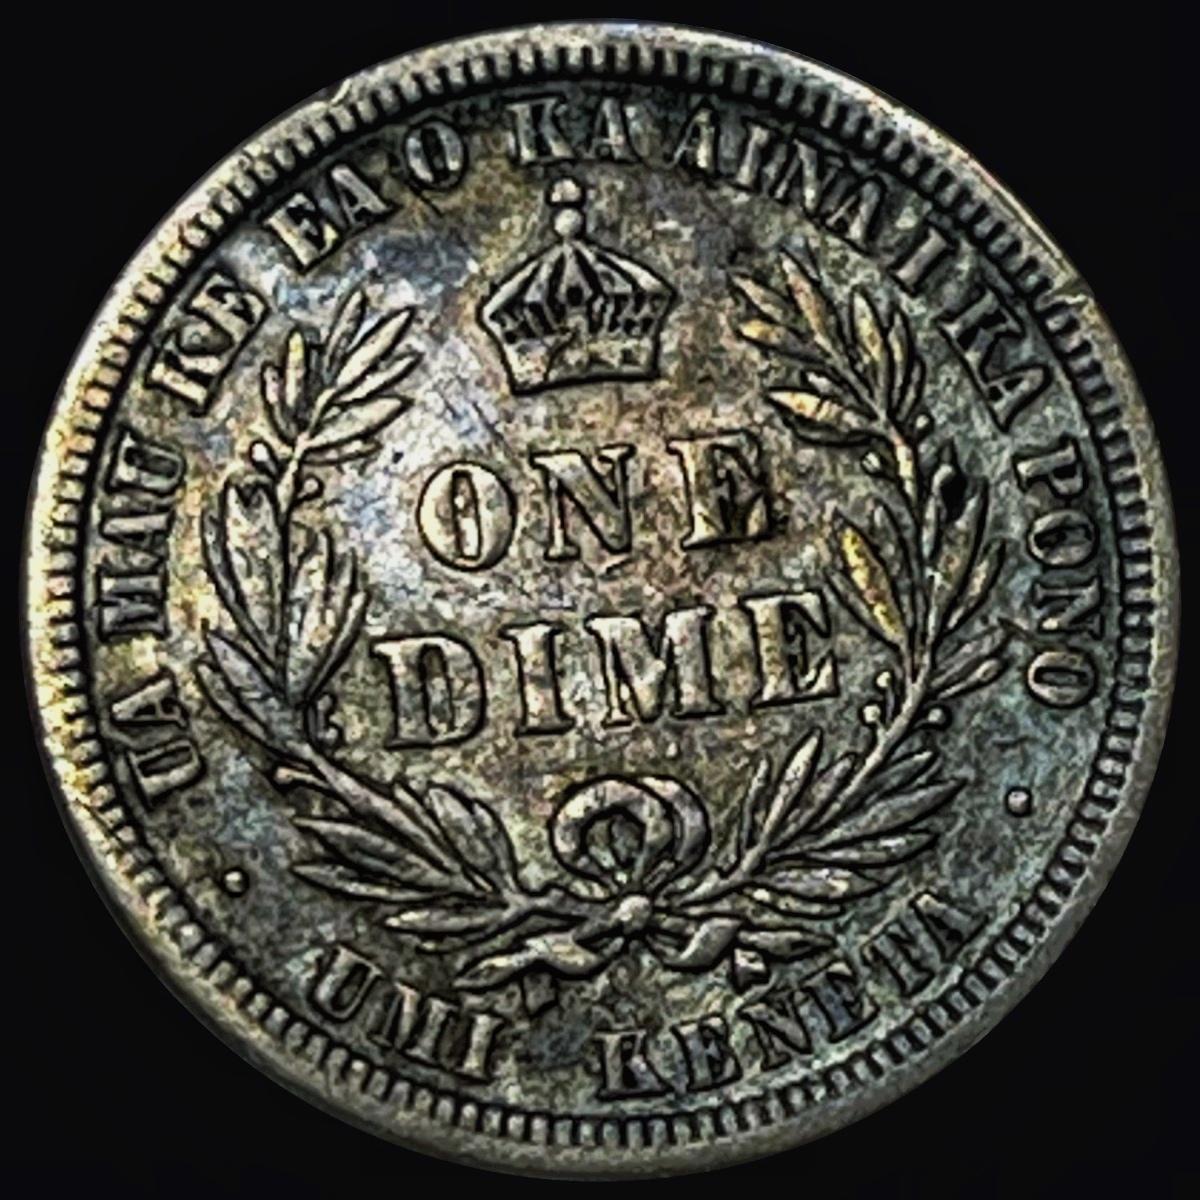 1883 Kingdom of Hawaii Dime NEARLY UNCIRCULATED